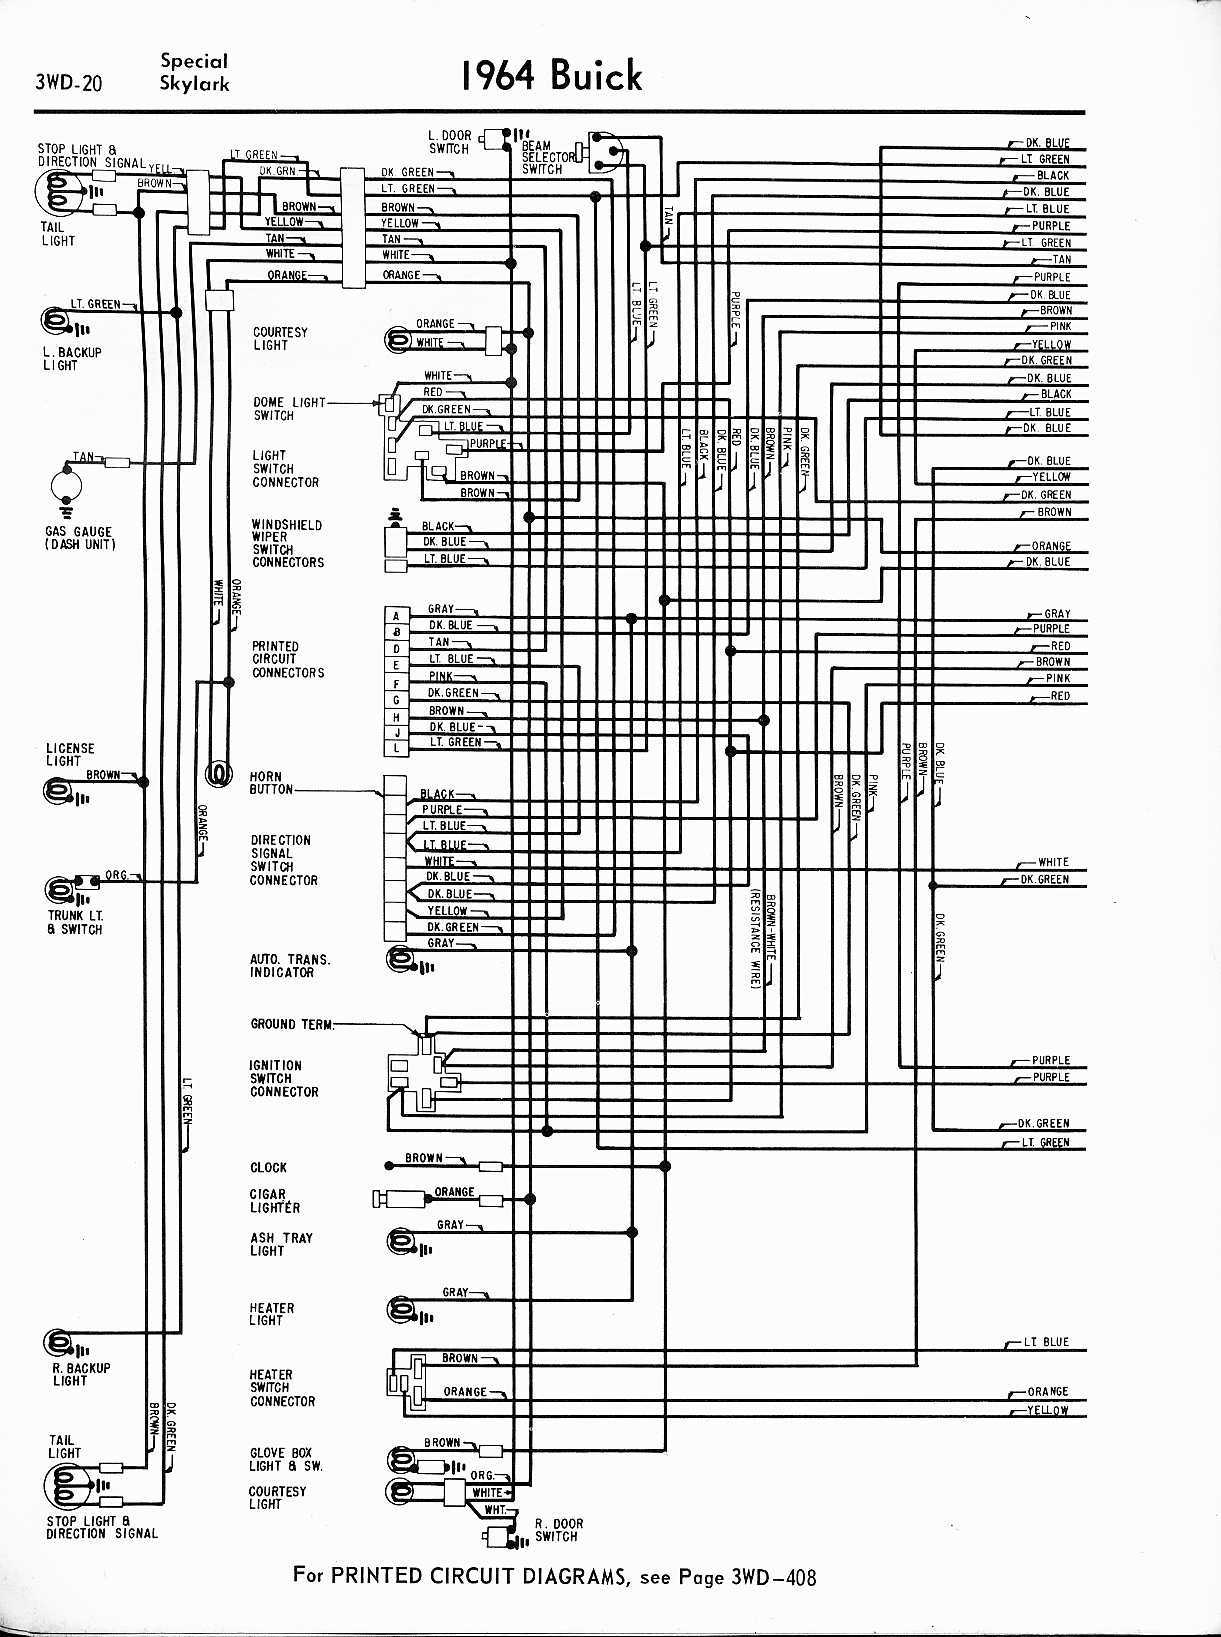 Buick Wiring Diagrams: 1957-1965 wiring diagram buick wildcat 